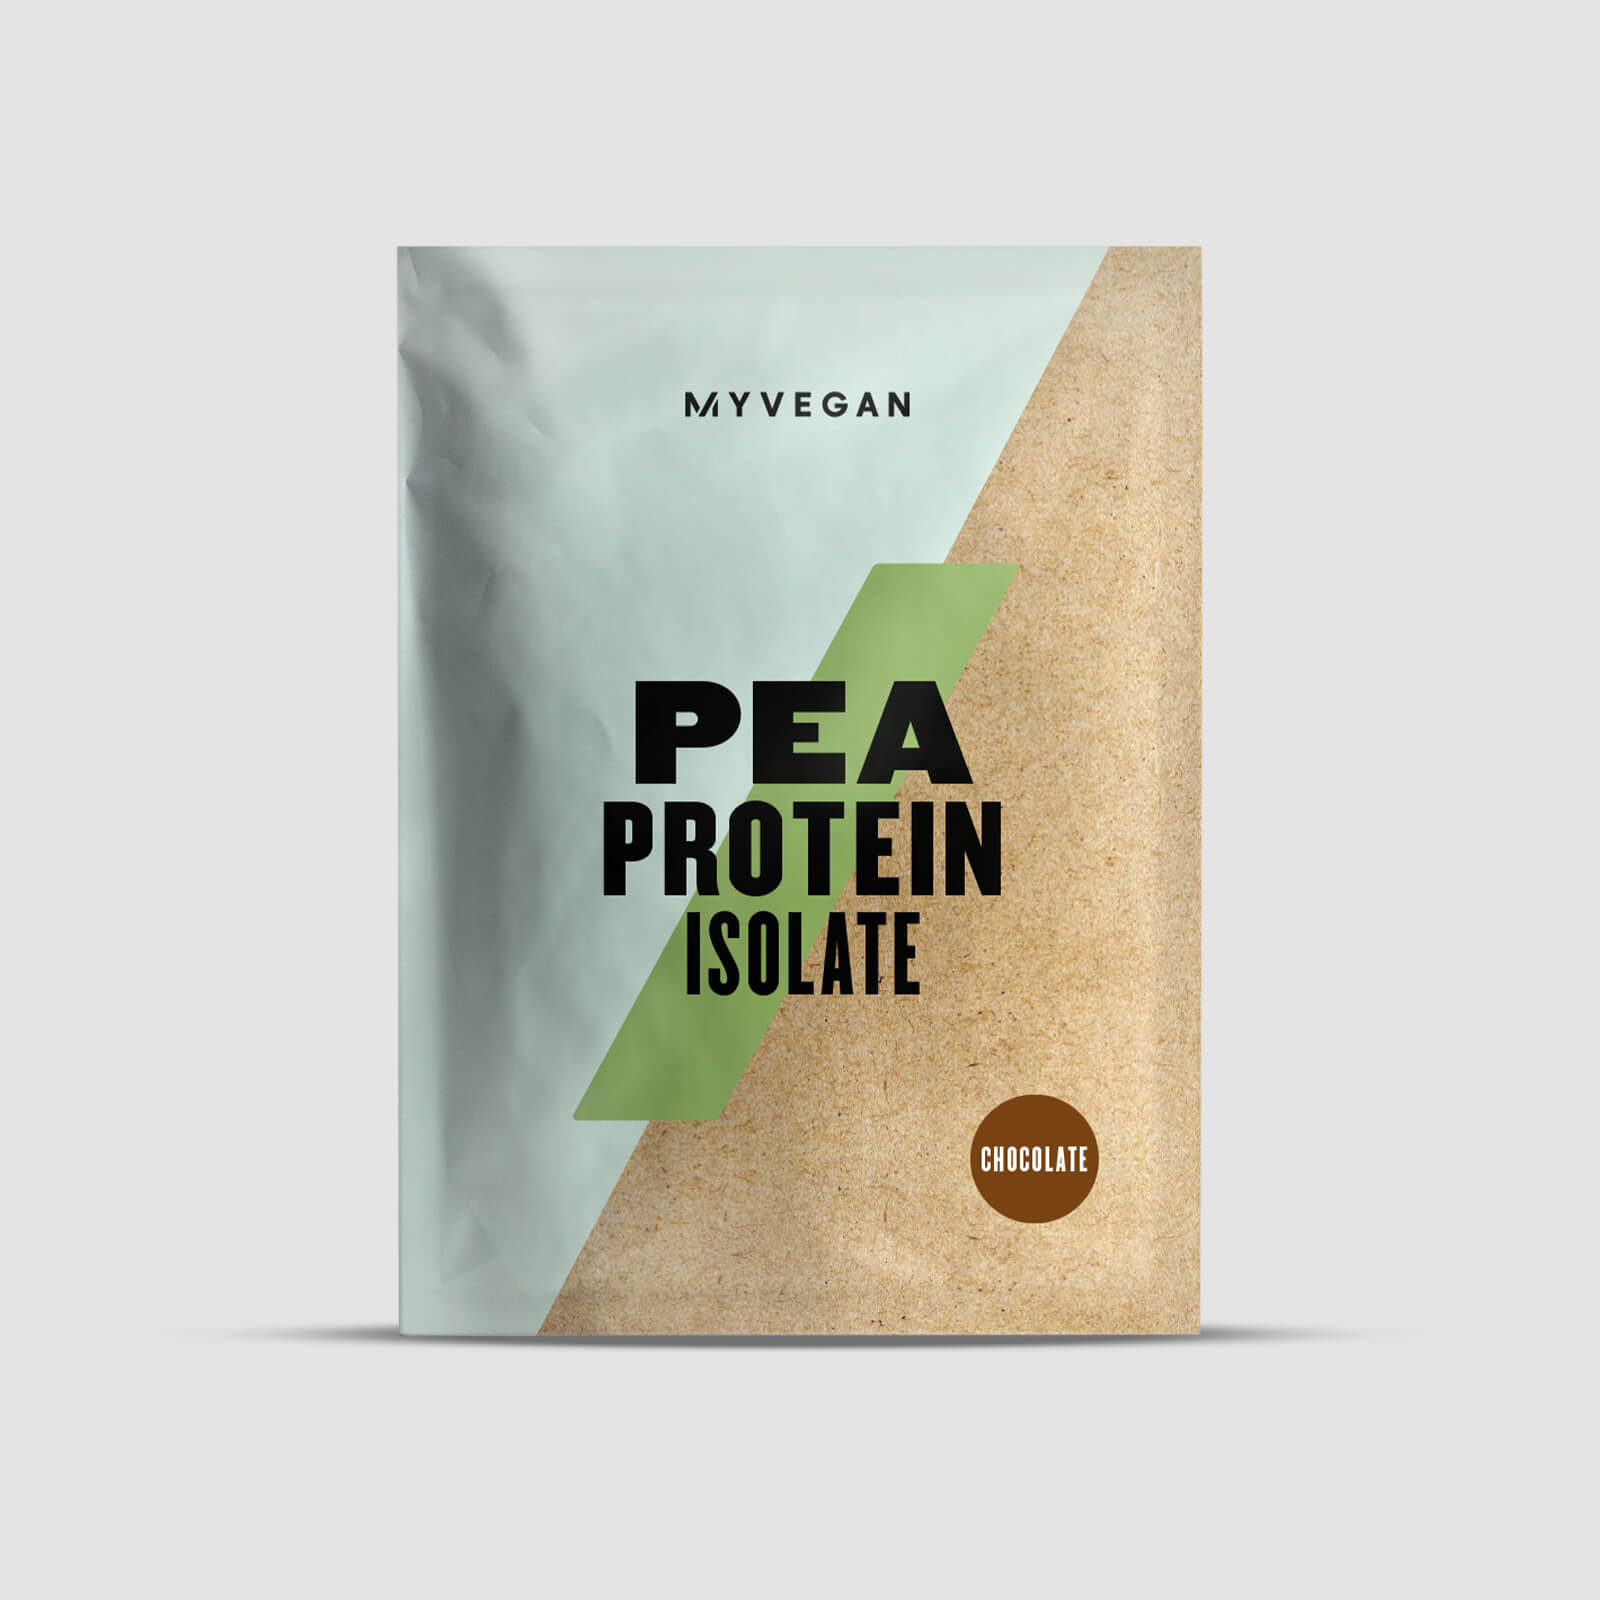 Myvegan Pea Protein Isolate (Sample) - Chocolate